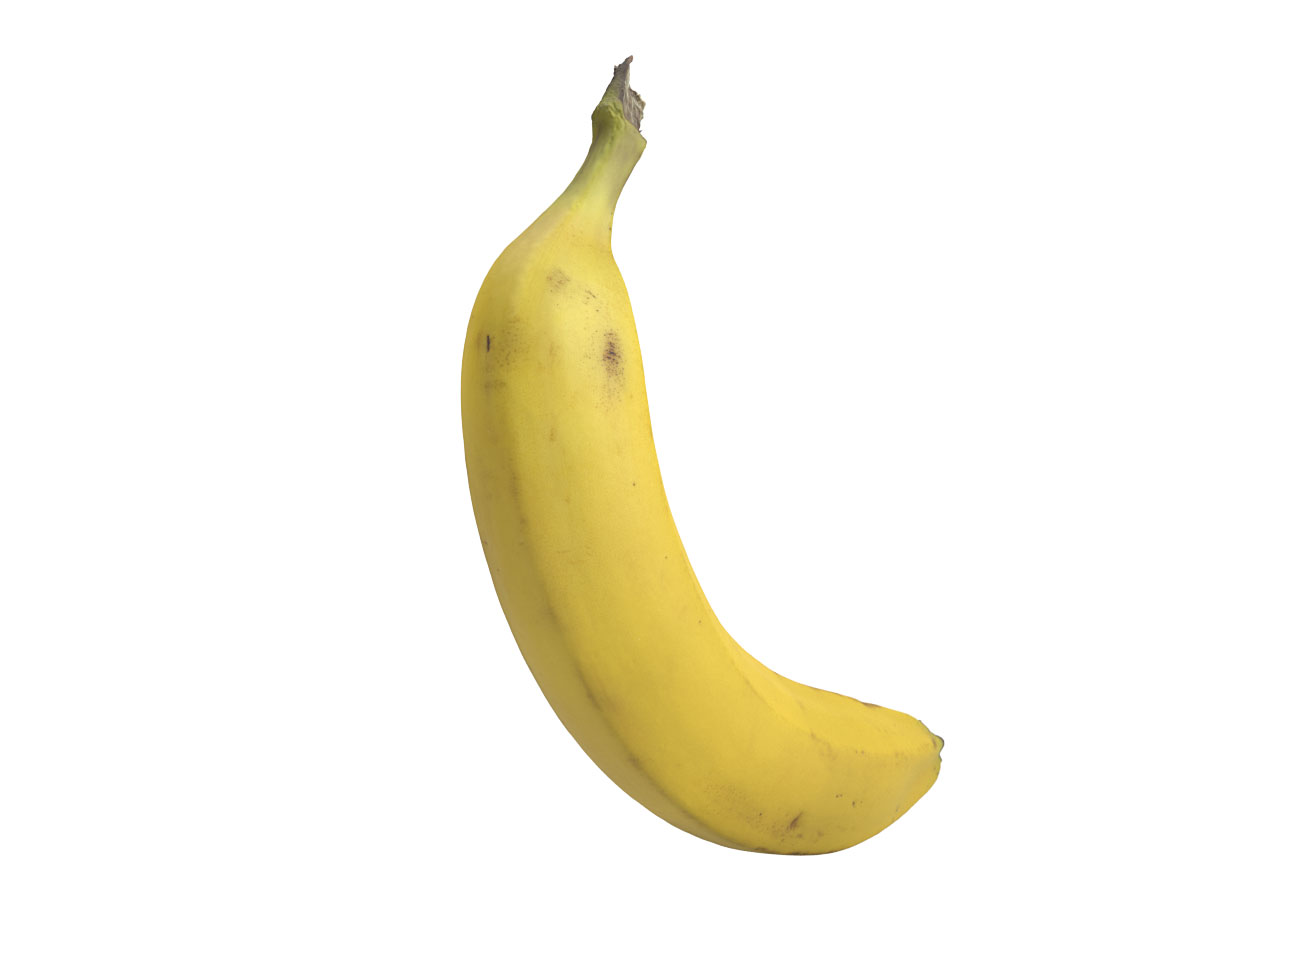  Banana  1 creative crops